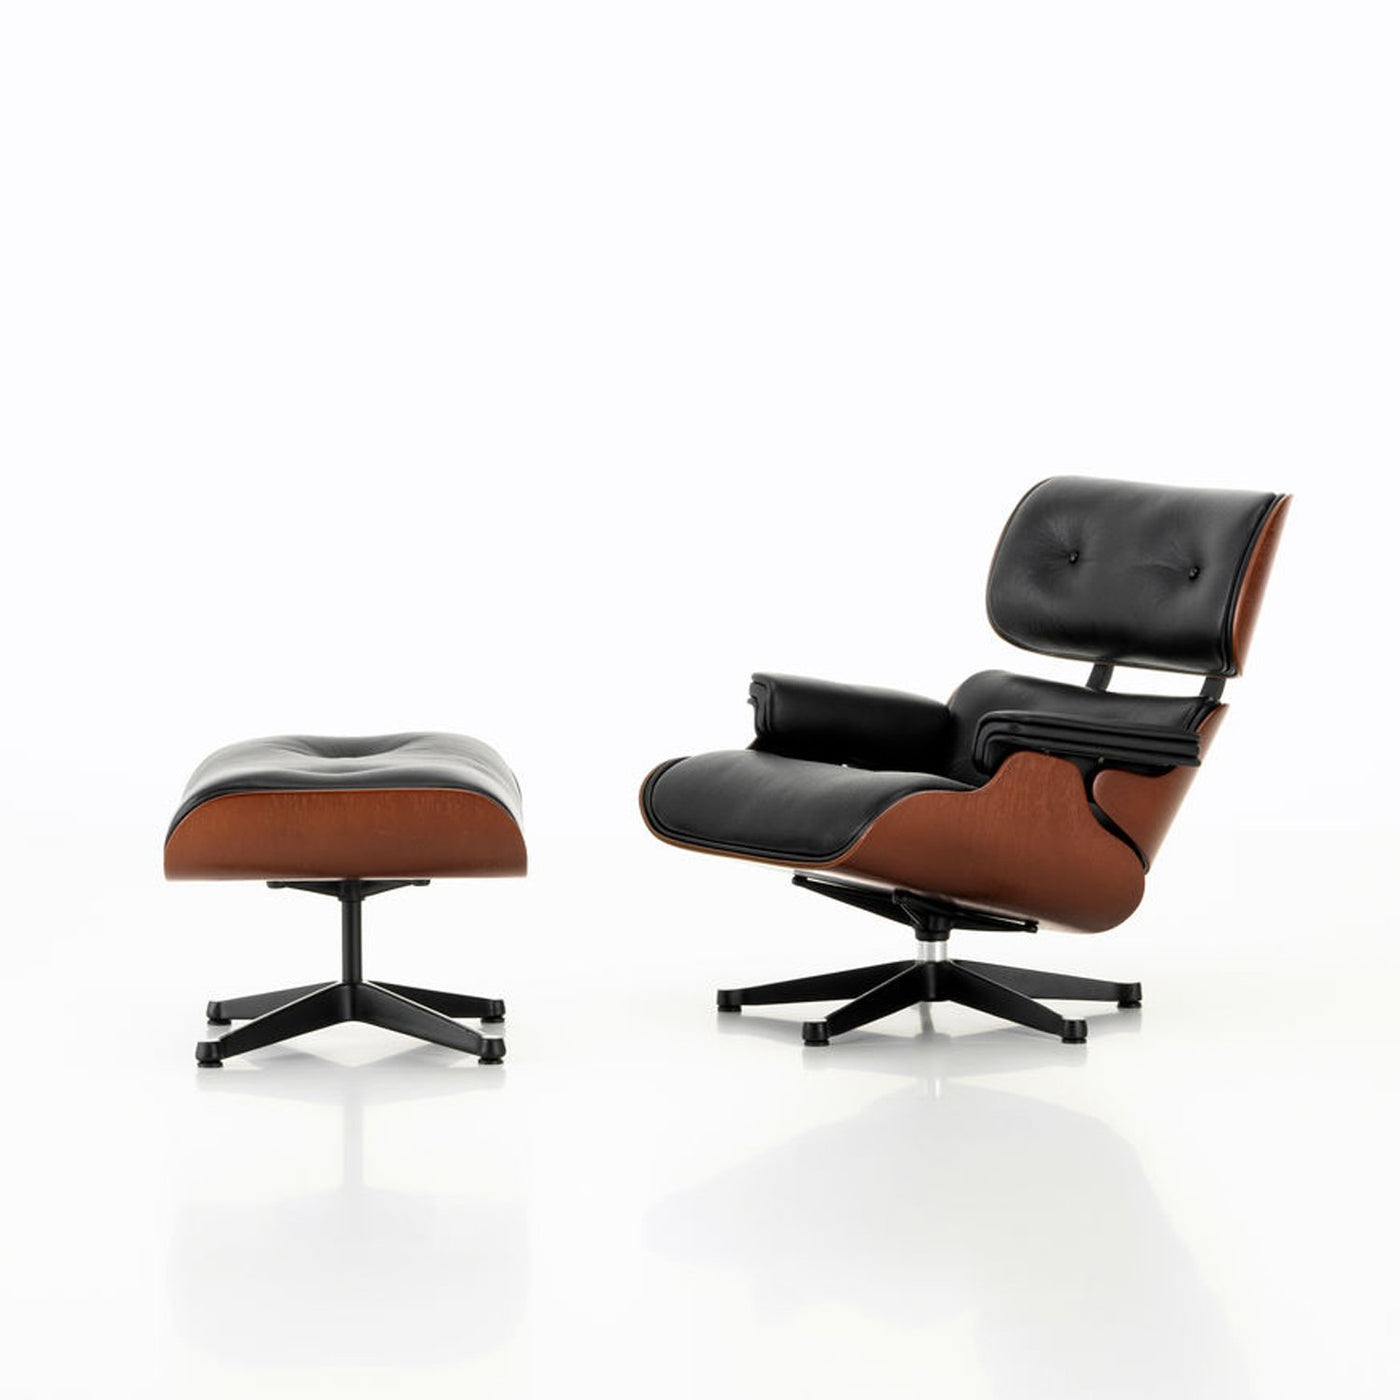 Miniatur Lounge Chair & Ottoman - Vitra Design Museum Shop